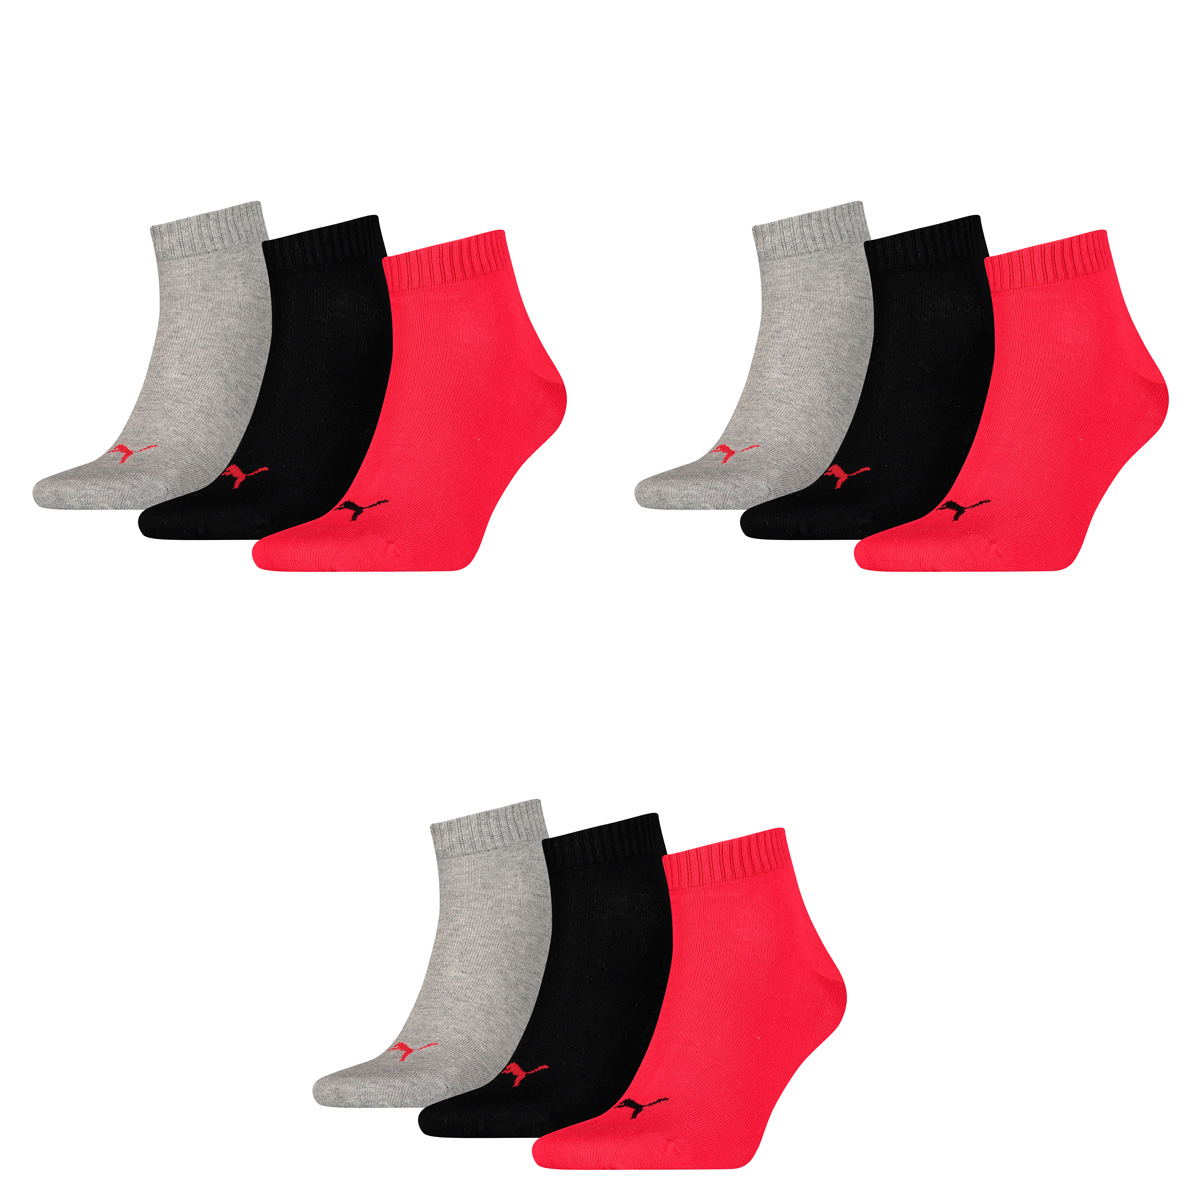 Puma 18 Paar Unisex Quarter Socken Sneaker Gr. 35-49 für Damen Herren Füßlinge, Socken & Strümpfe:43-46, Farbe:232 - black/red